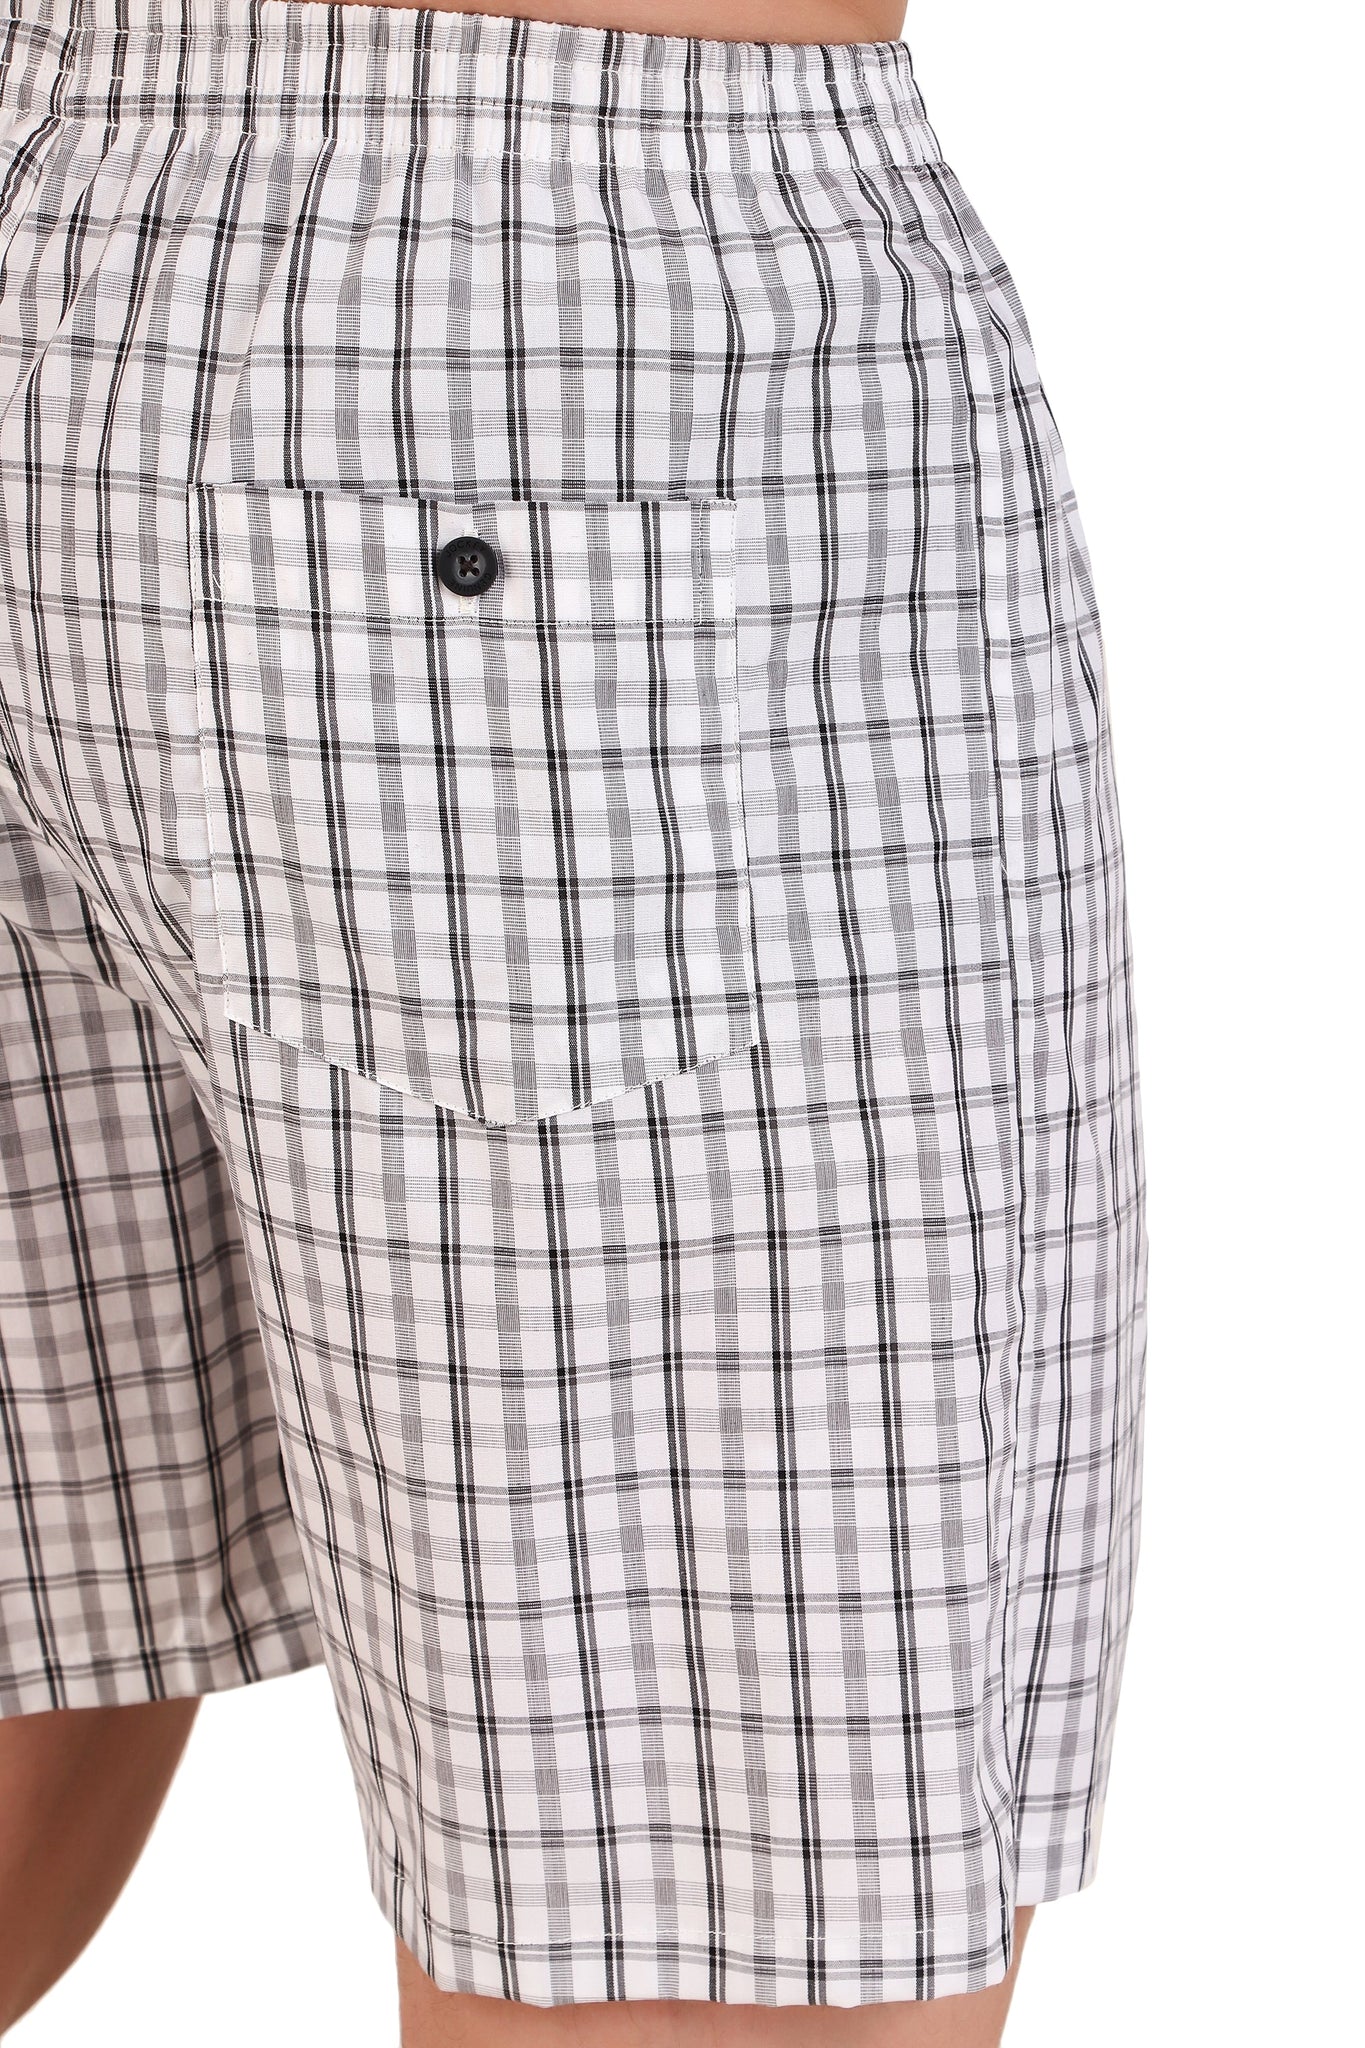 Jockey-1222 Super Combed Mercerized Cotton Woven Checkered Boxer Shorts with Back Pocket